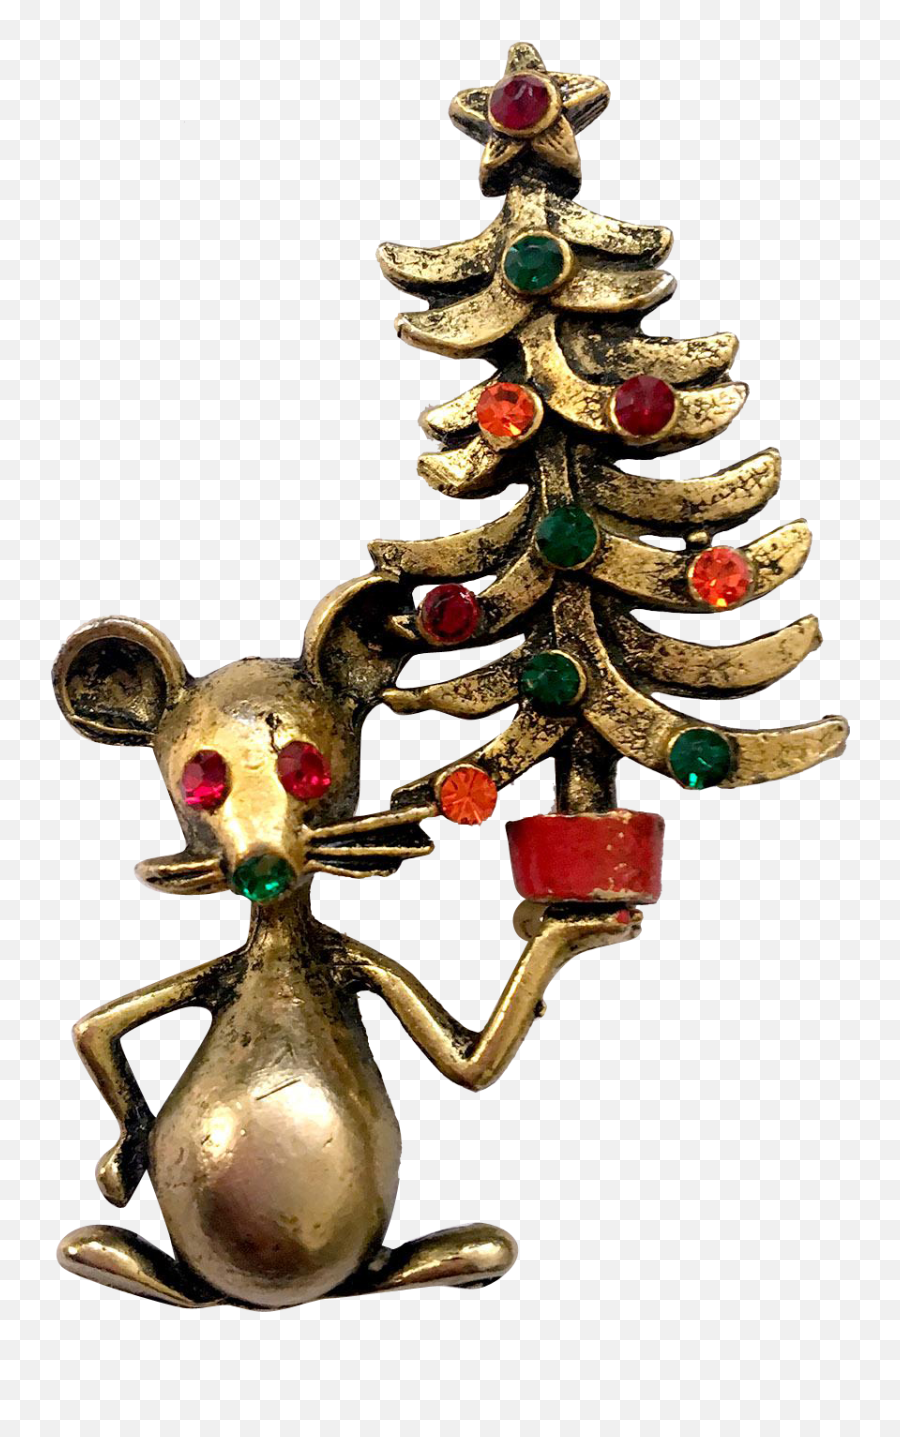 Mouse Holding Up A Christmas Tree Pin - Christmas Day Emoji,Twas The Night Before Christmas Emojis